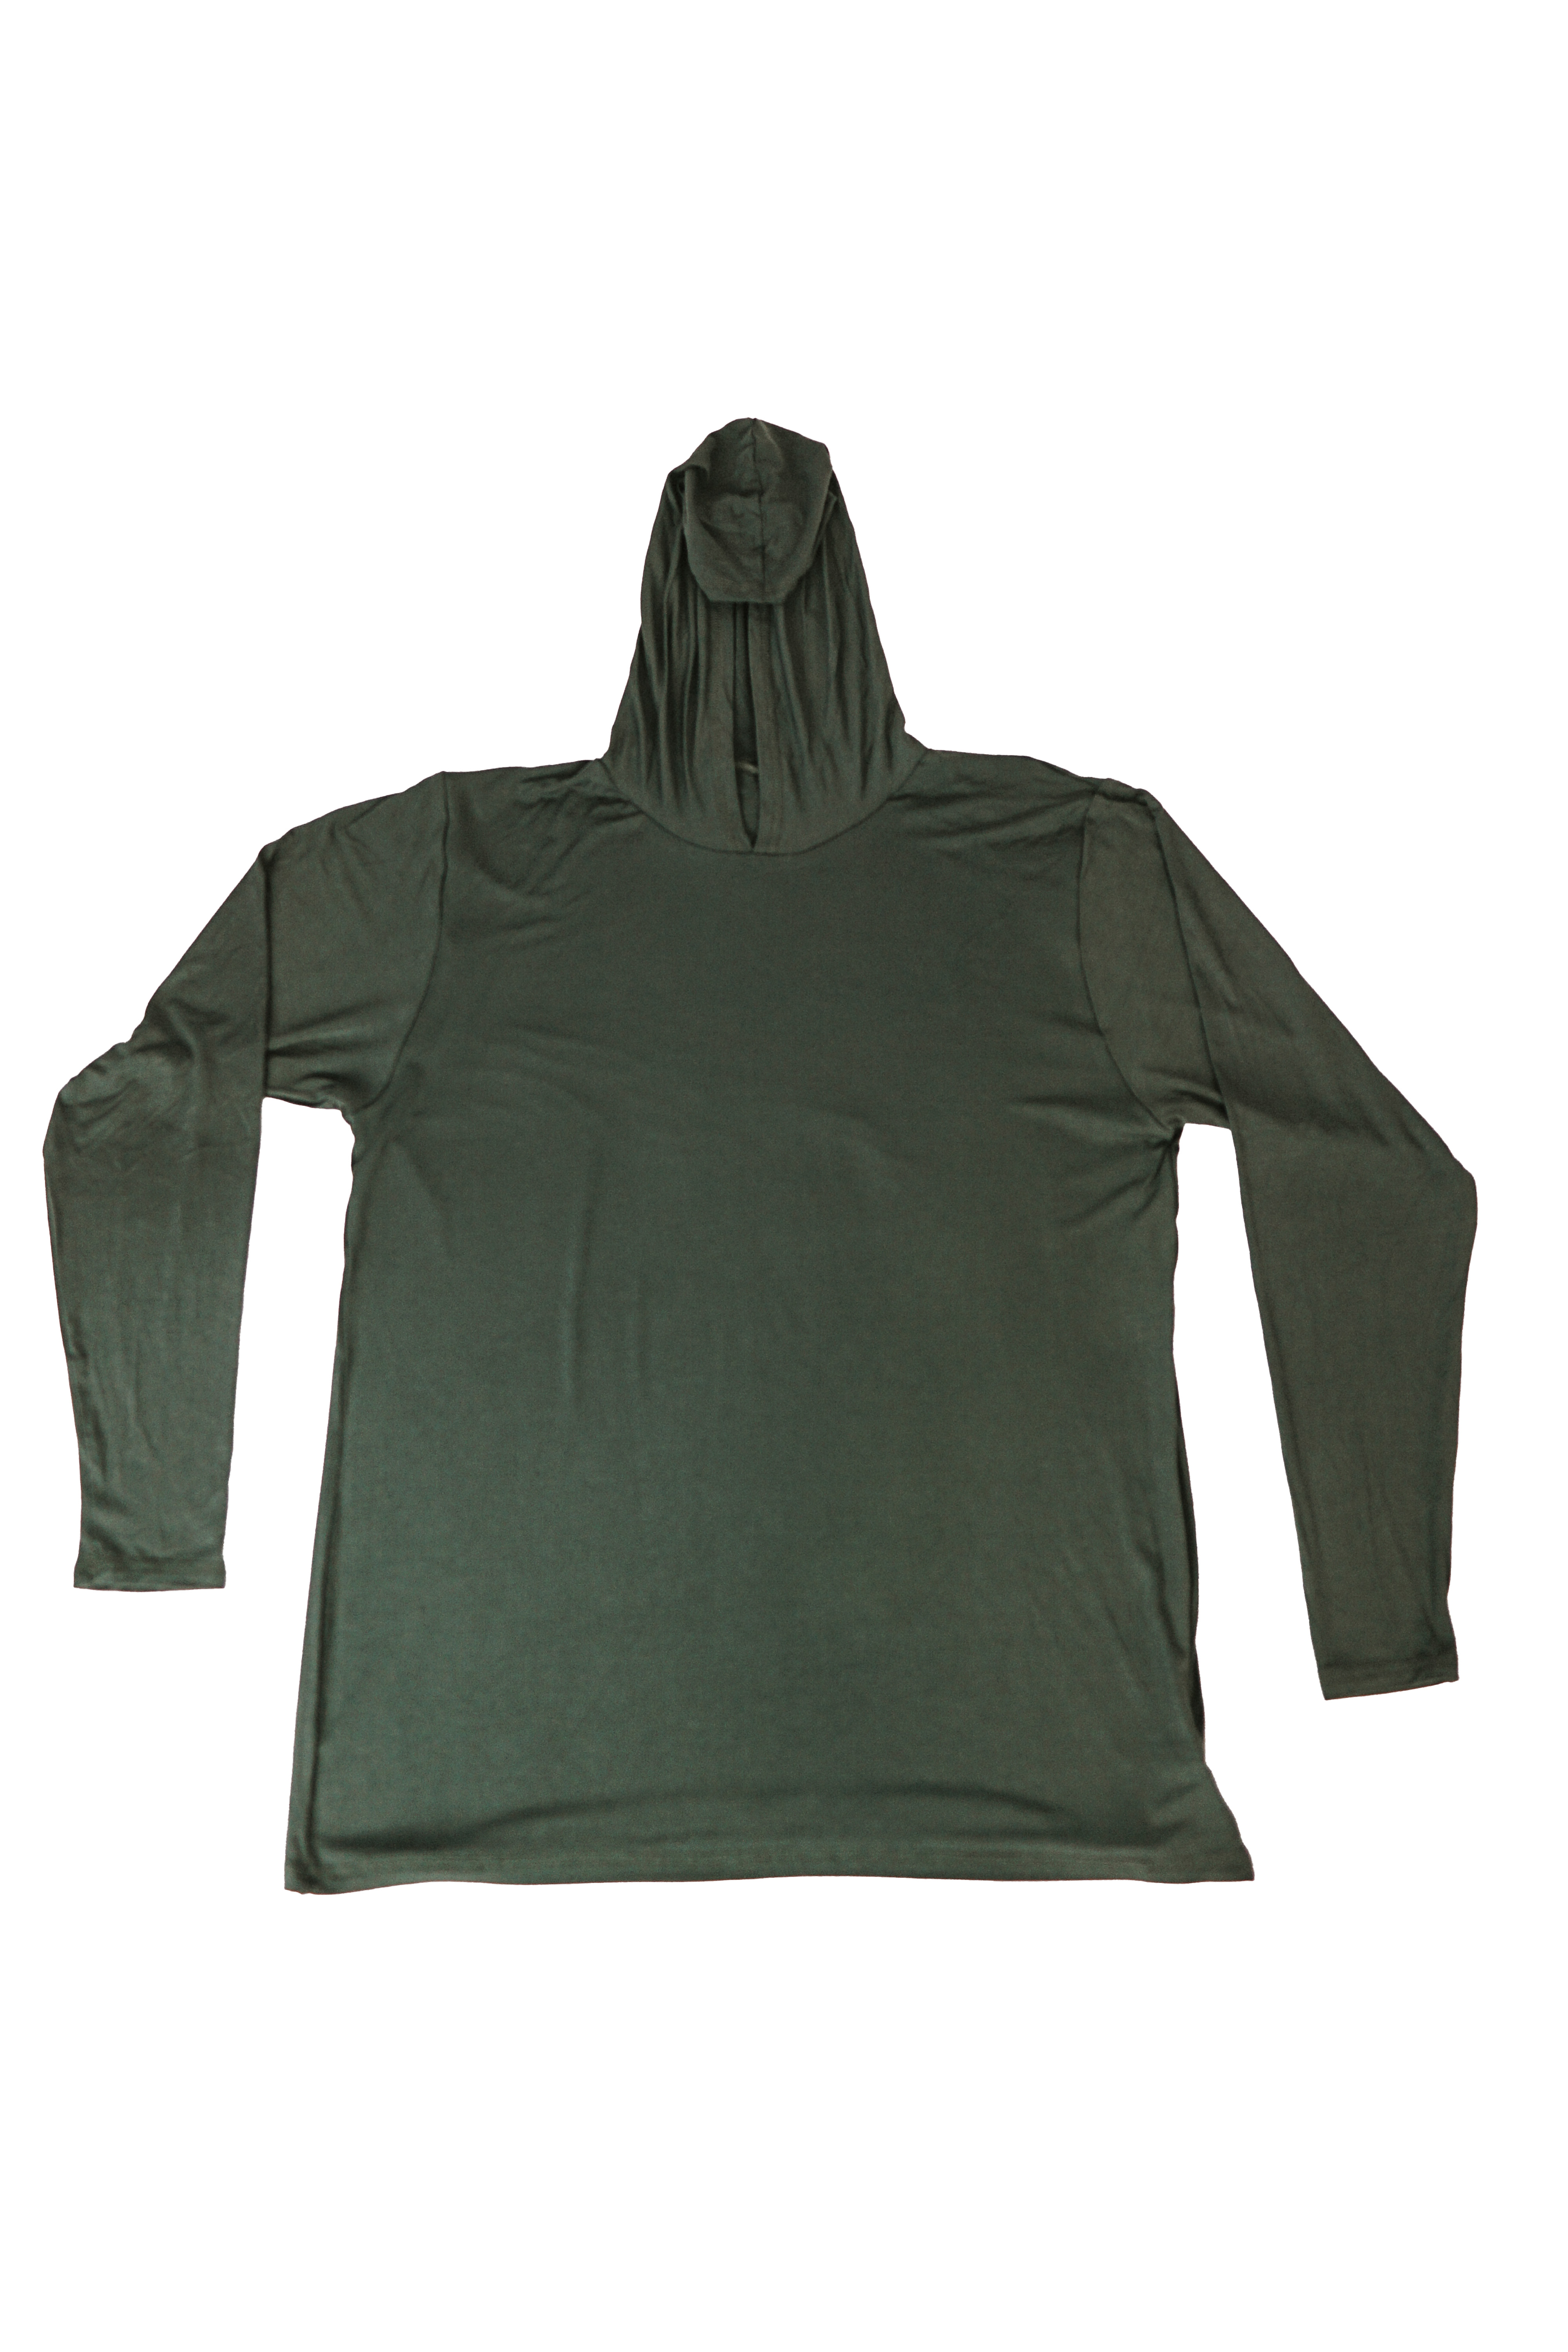 Unisex Hooded Sun Shirt  UPF+ UV Protection Shirt Made in USA